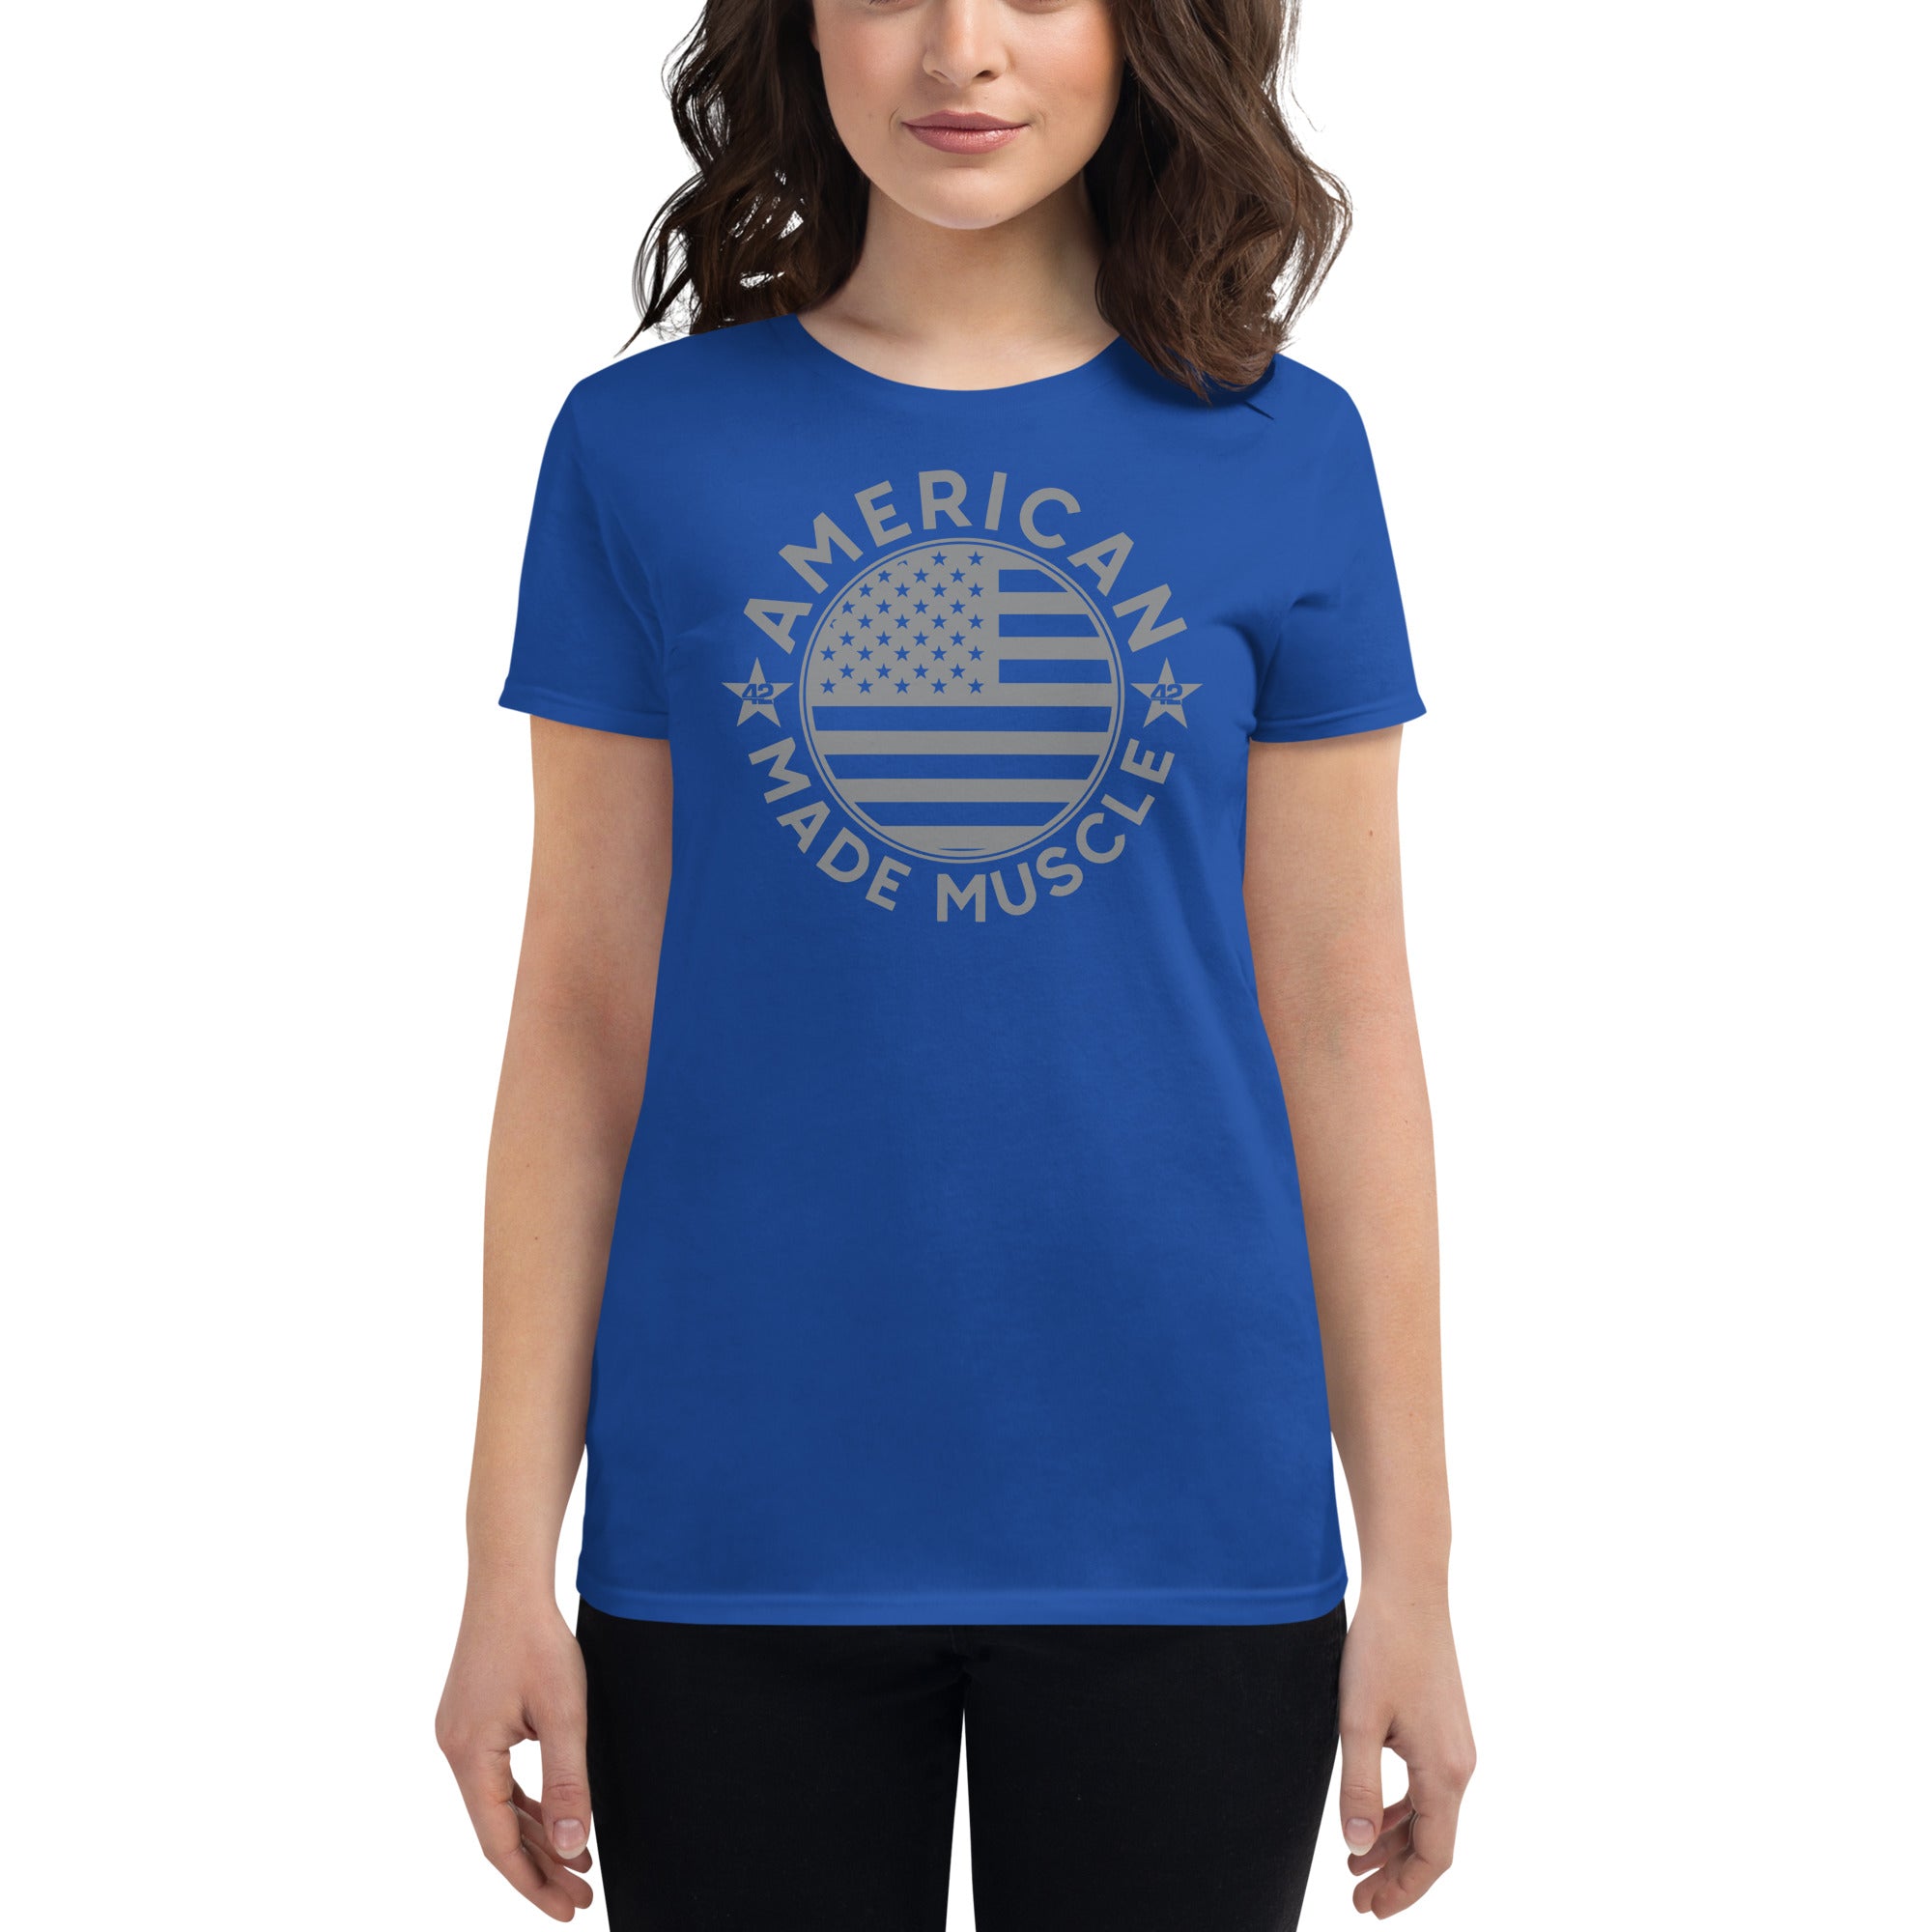 American Muscle Women's short sleeve t-shirt